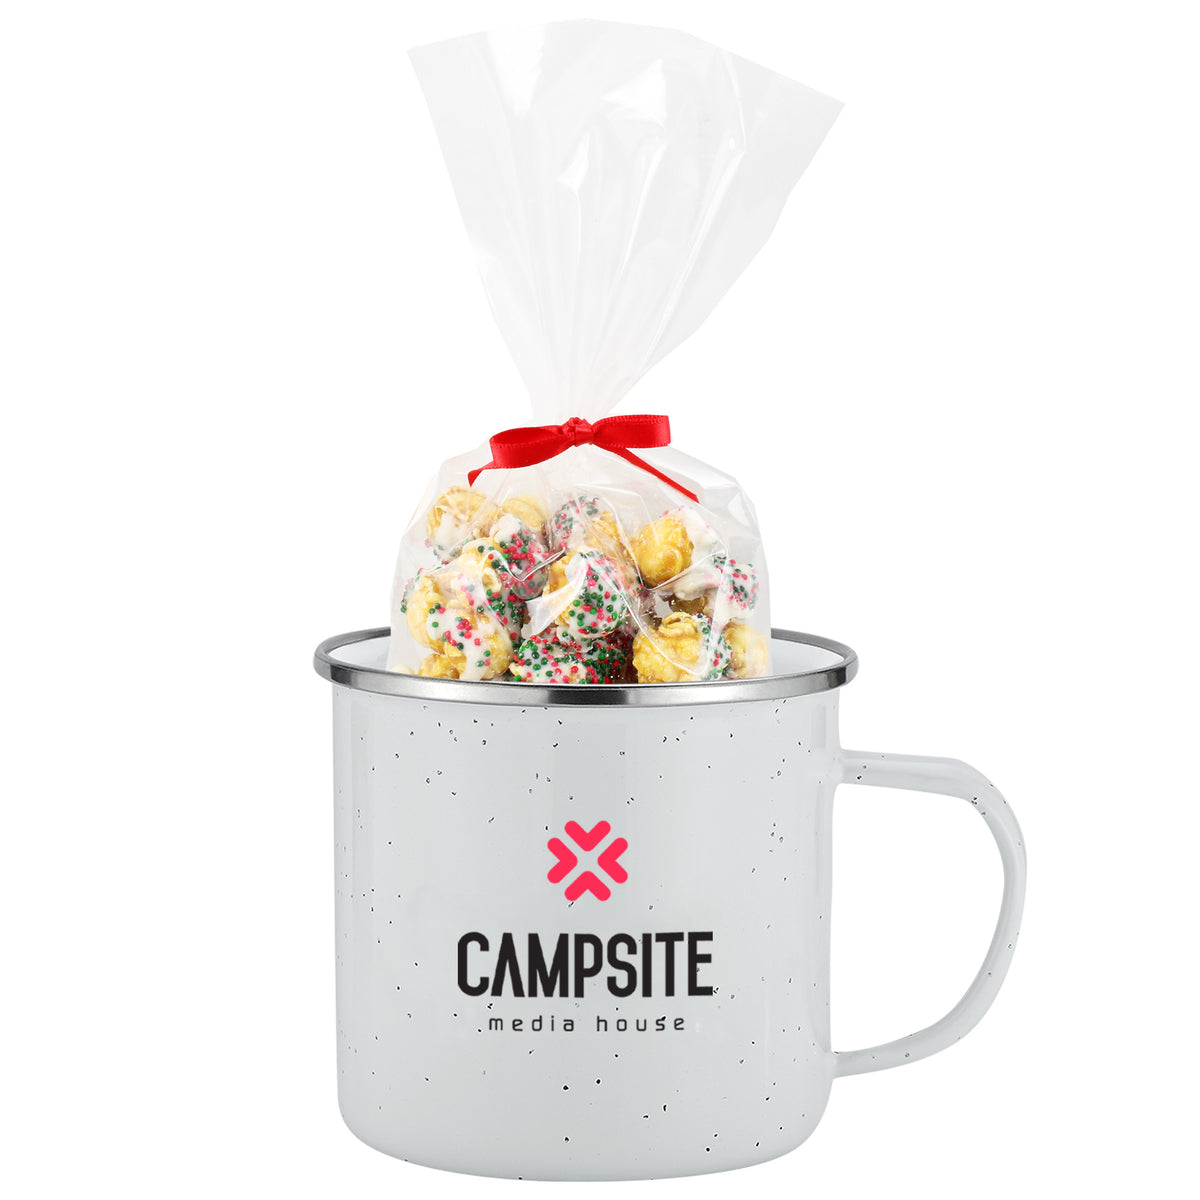 Speckled Camping Mug - 16 oz., Sugar Cookie Crunch Popcorn